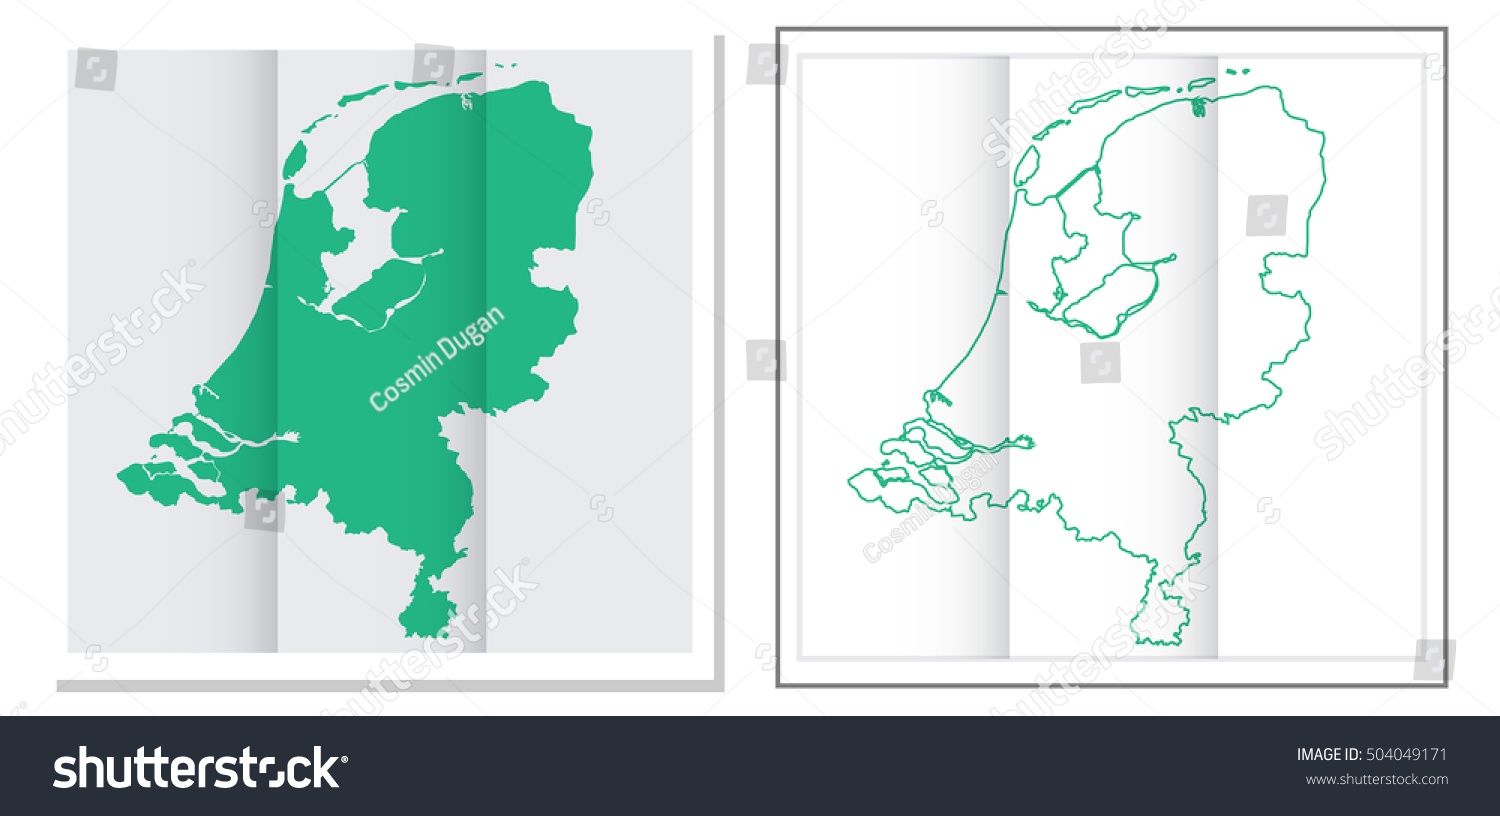 Netherlands maps #504049171